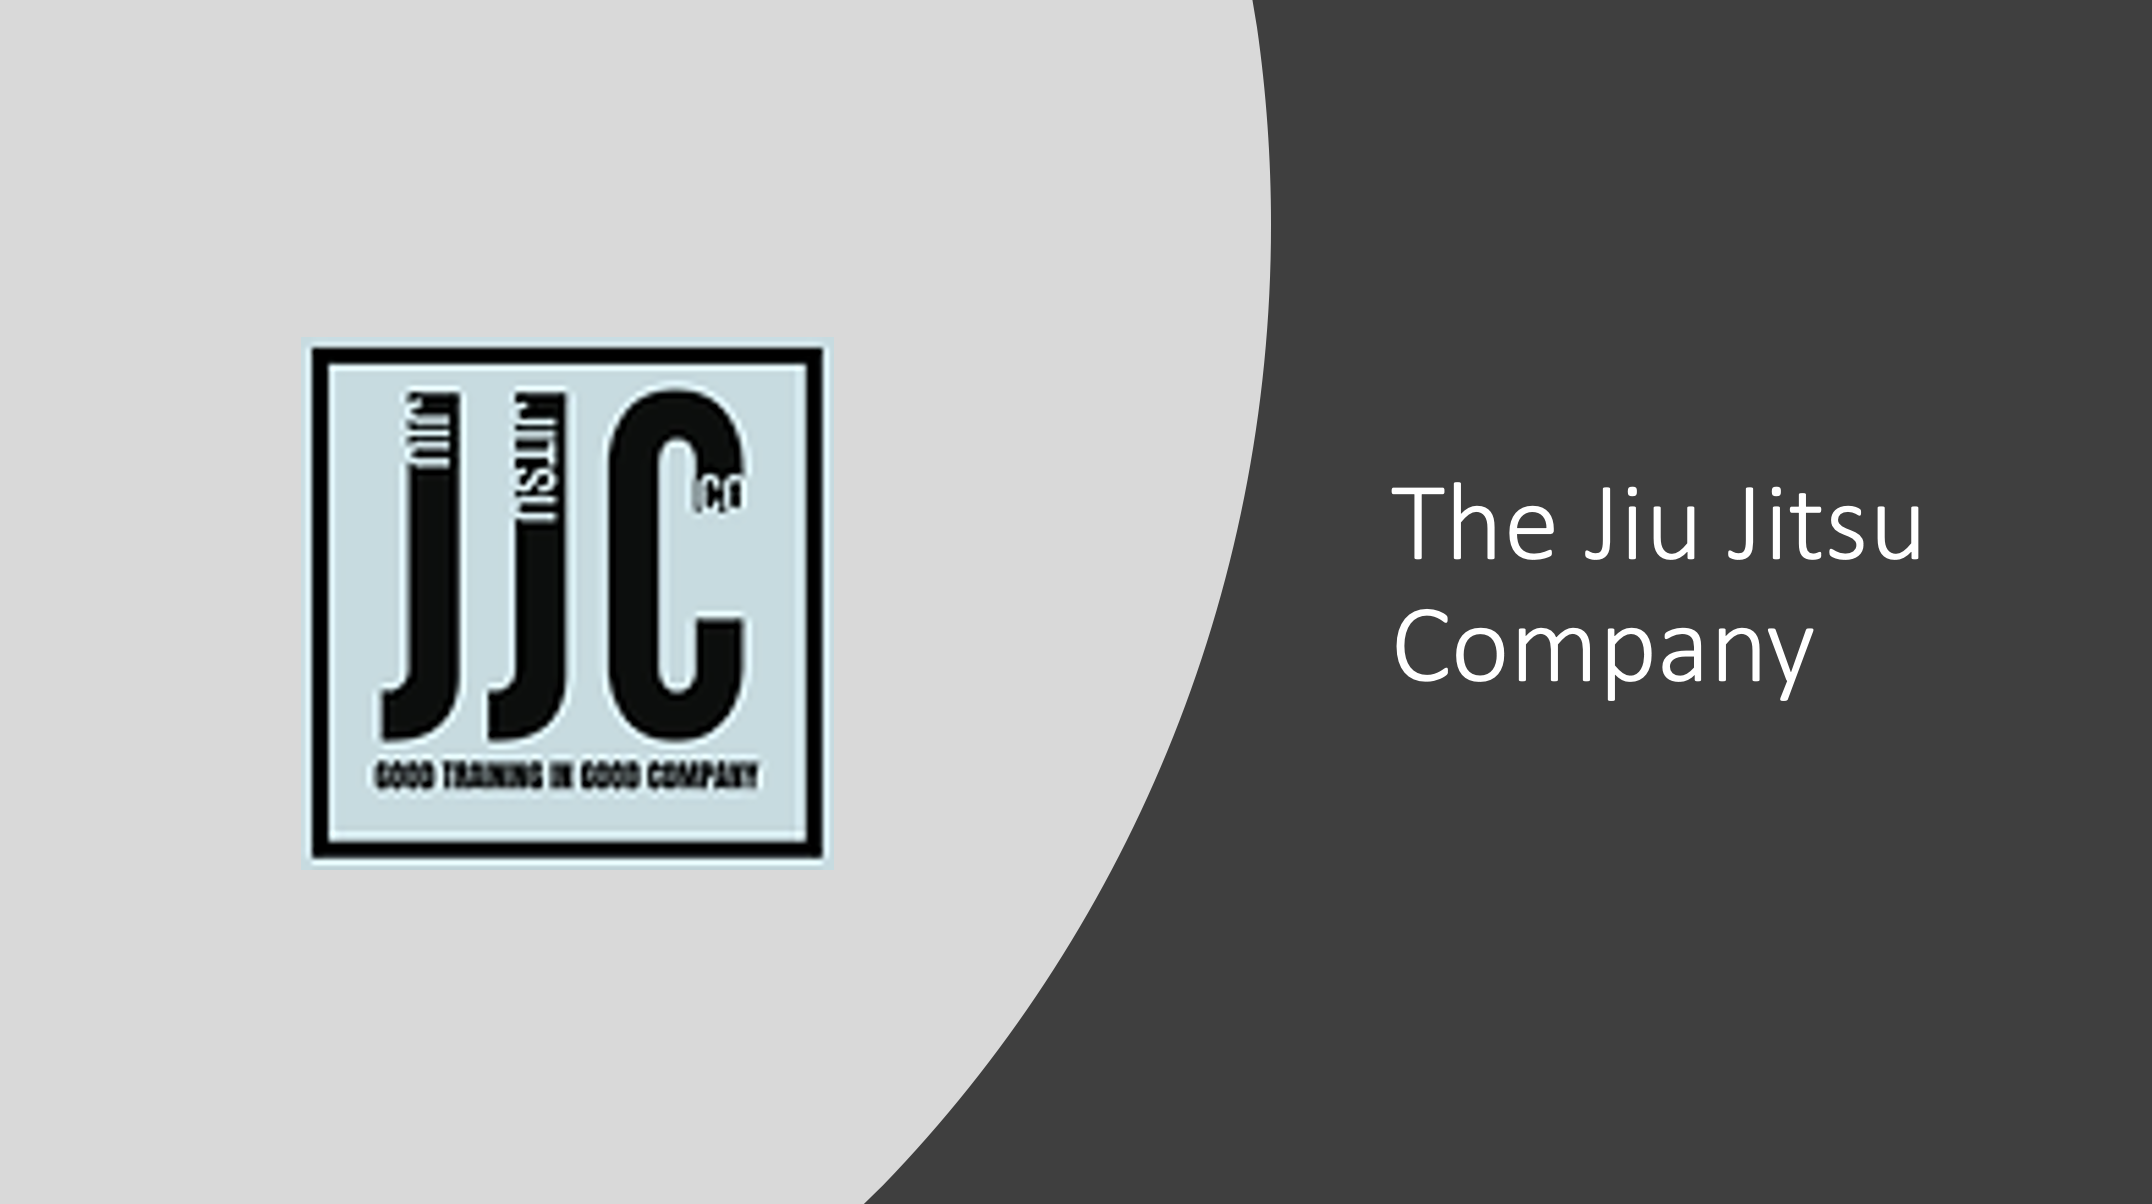 The Jiu Jitsu Company